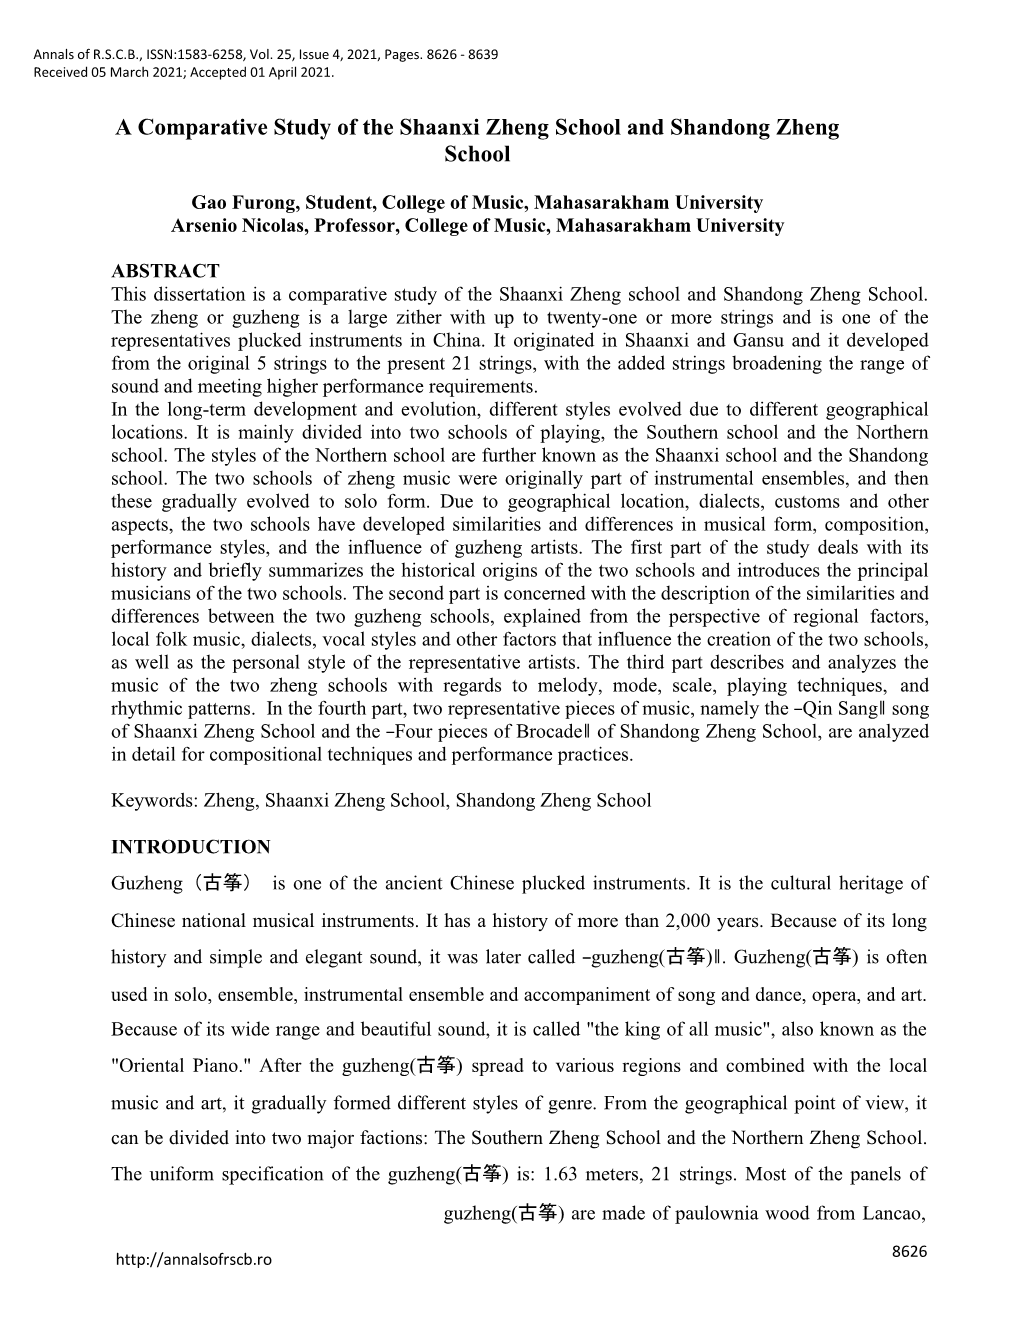 A Comparative Study of the Shaanxi Zheng School and Shandong Zheng School